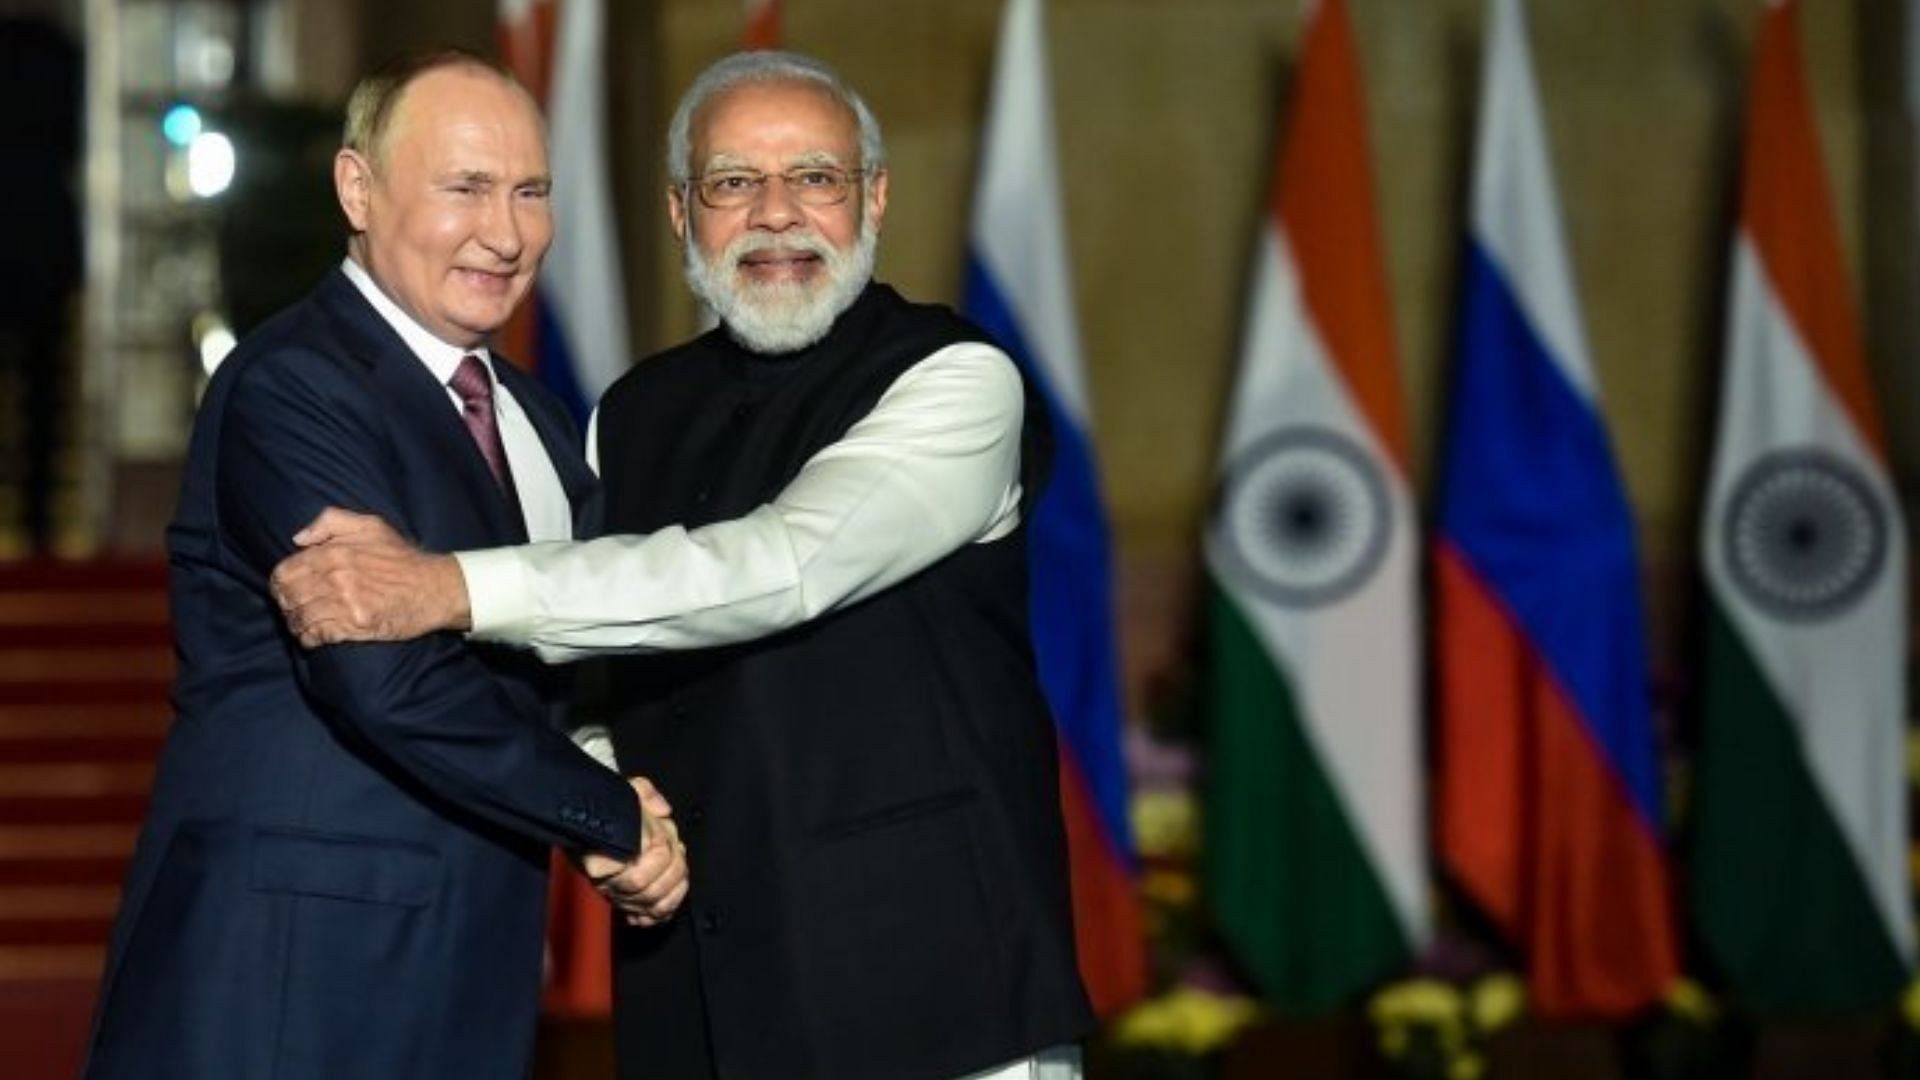 <div class="paragraphs"><p>Russian President Vladimir Putin and Prime Minister Narendra Modi.</p></div>